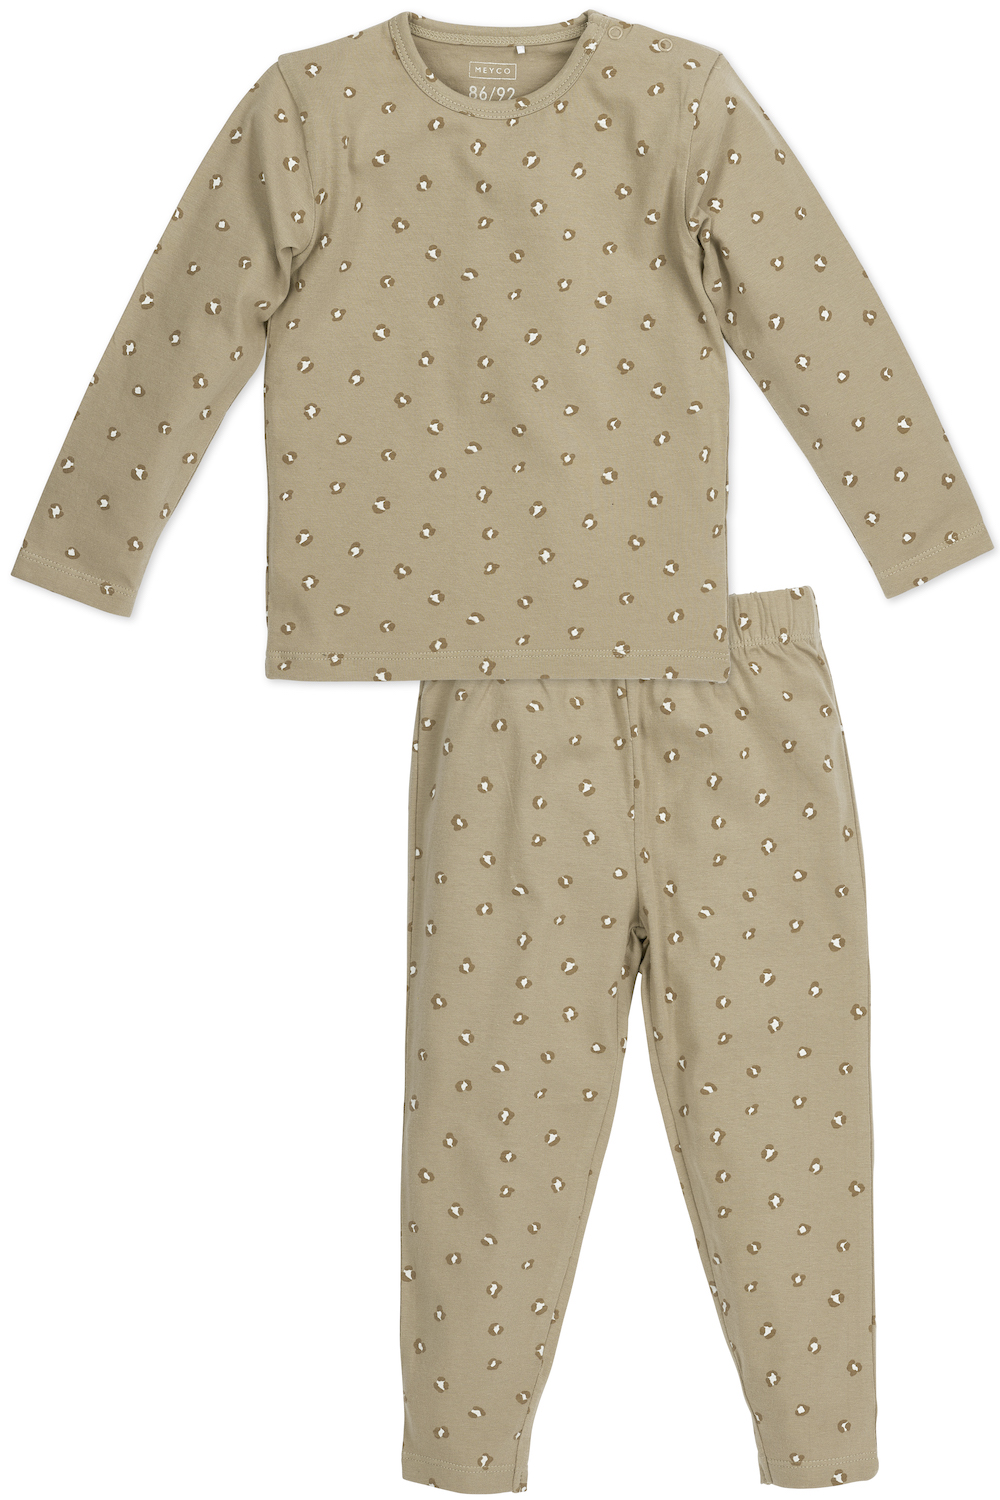 Pyjama Mini Panther - Sand - Größe 98/104